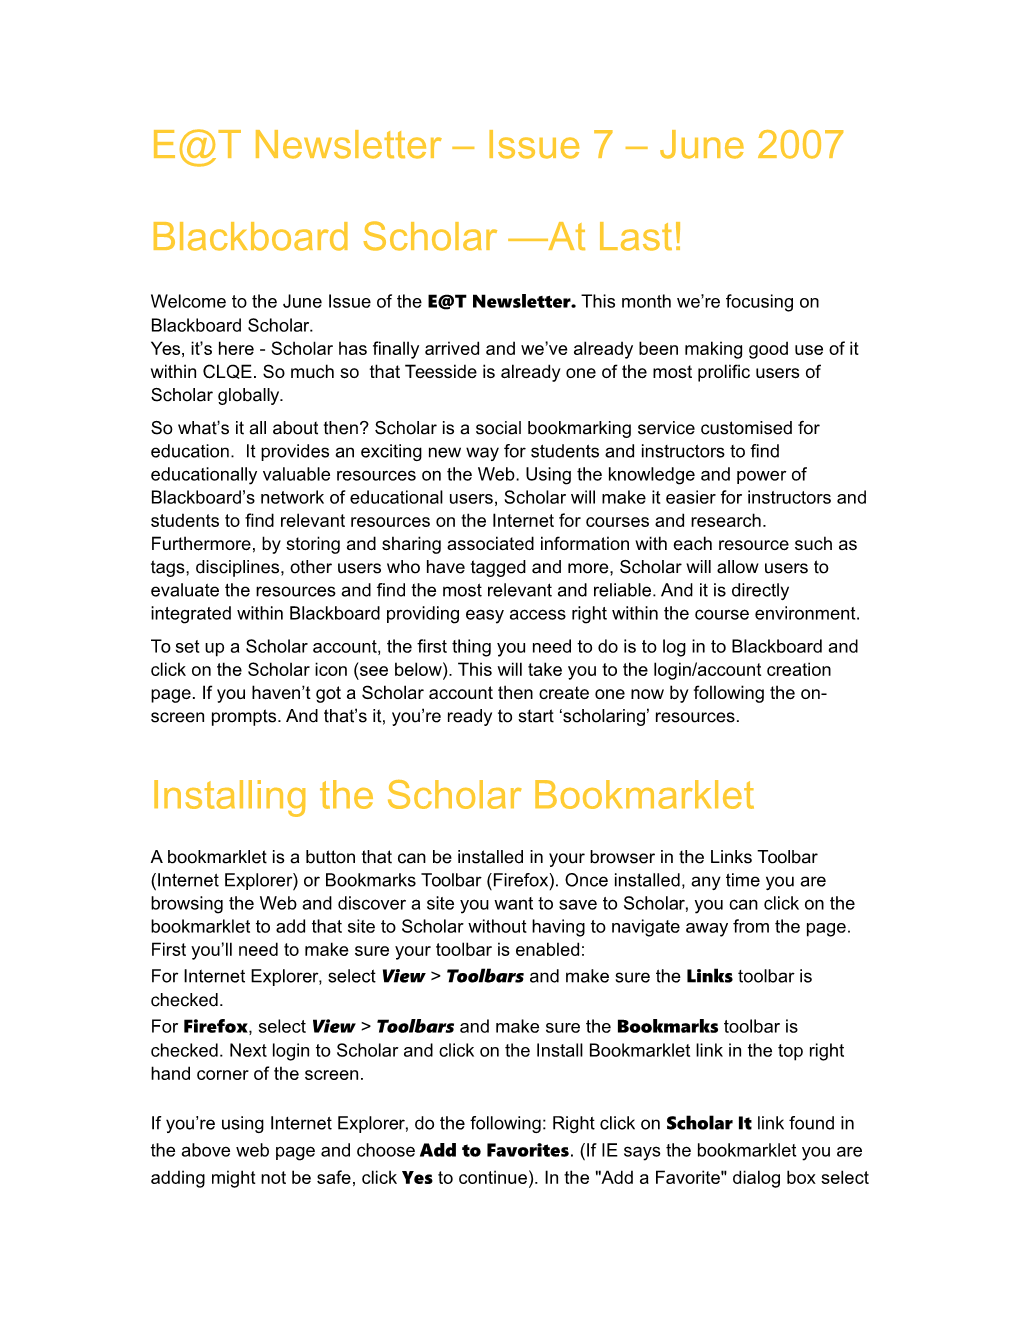 Blackboard Scholar at Last!